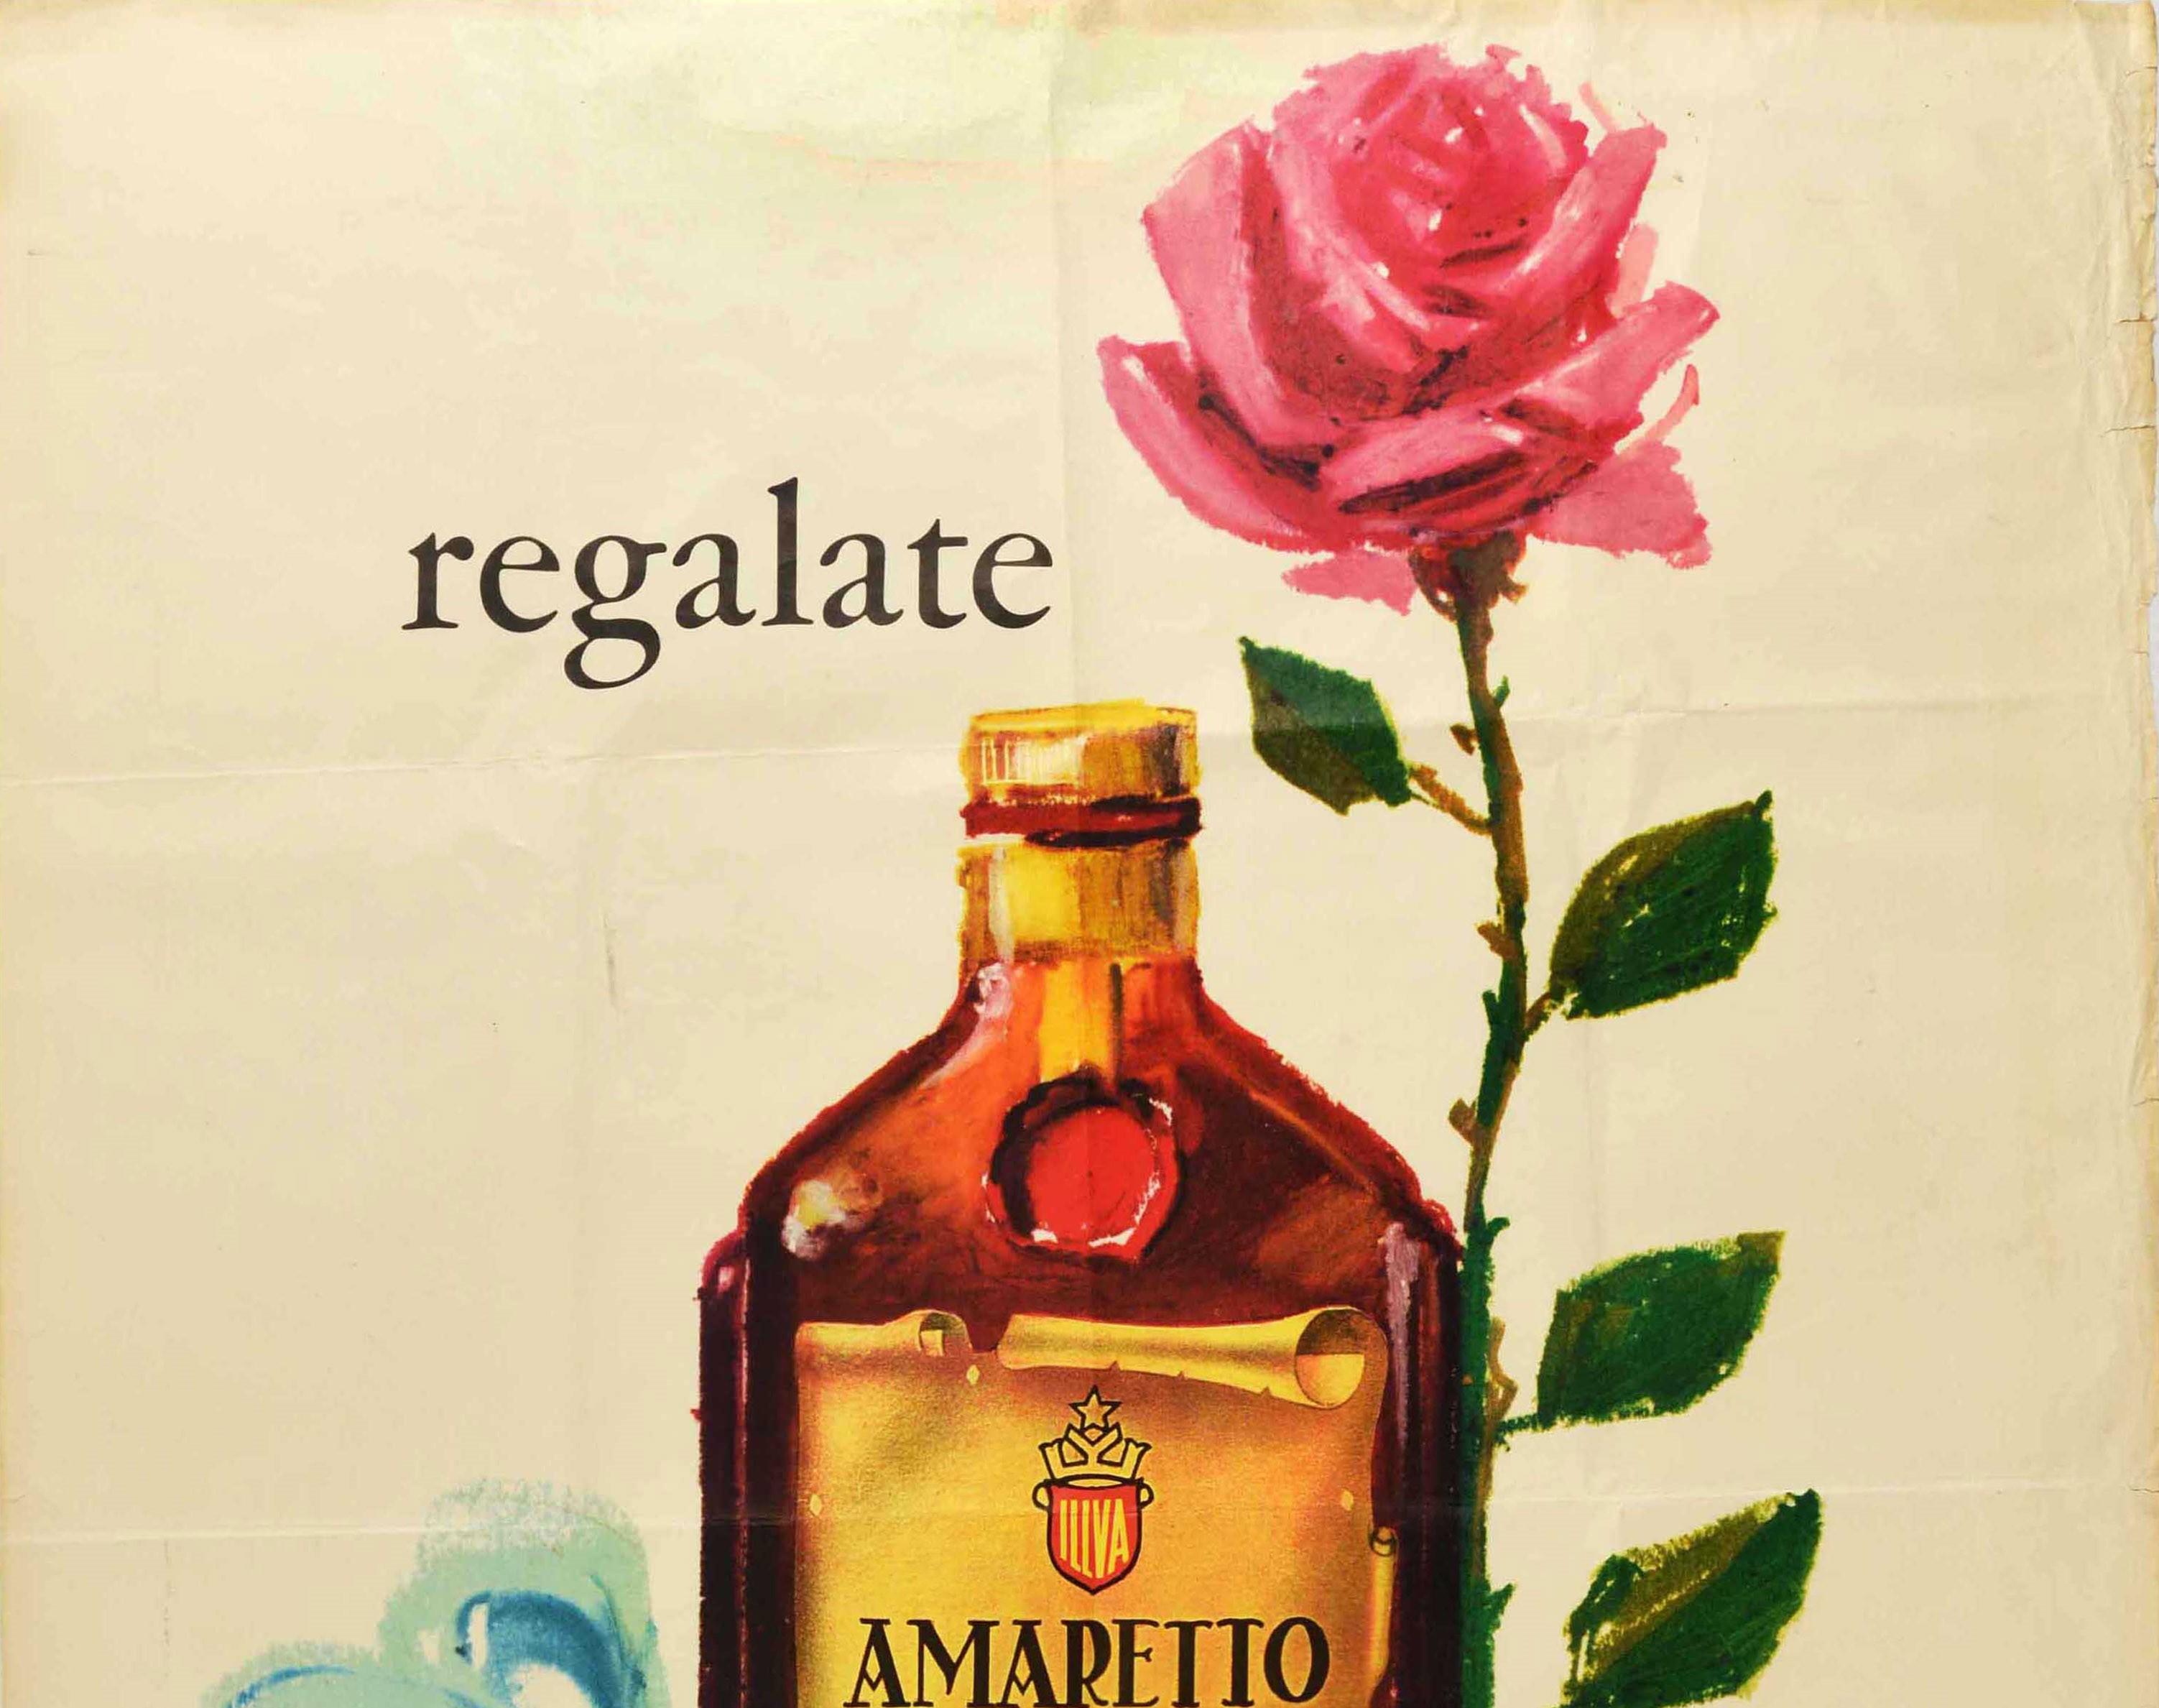 Original Vintage Drink Poster Amaretto Di Saronno Liquor Gift Advertising Design - Print by Walter Del Frate